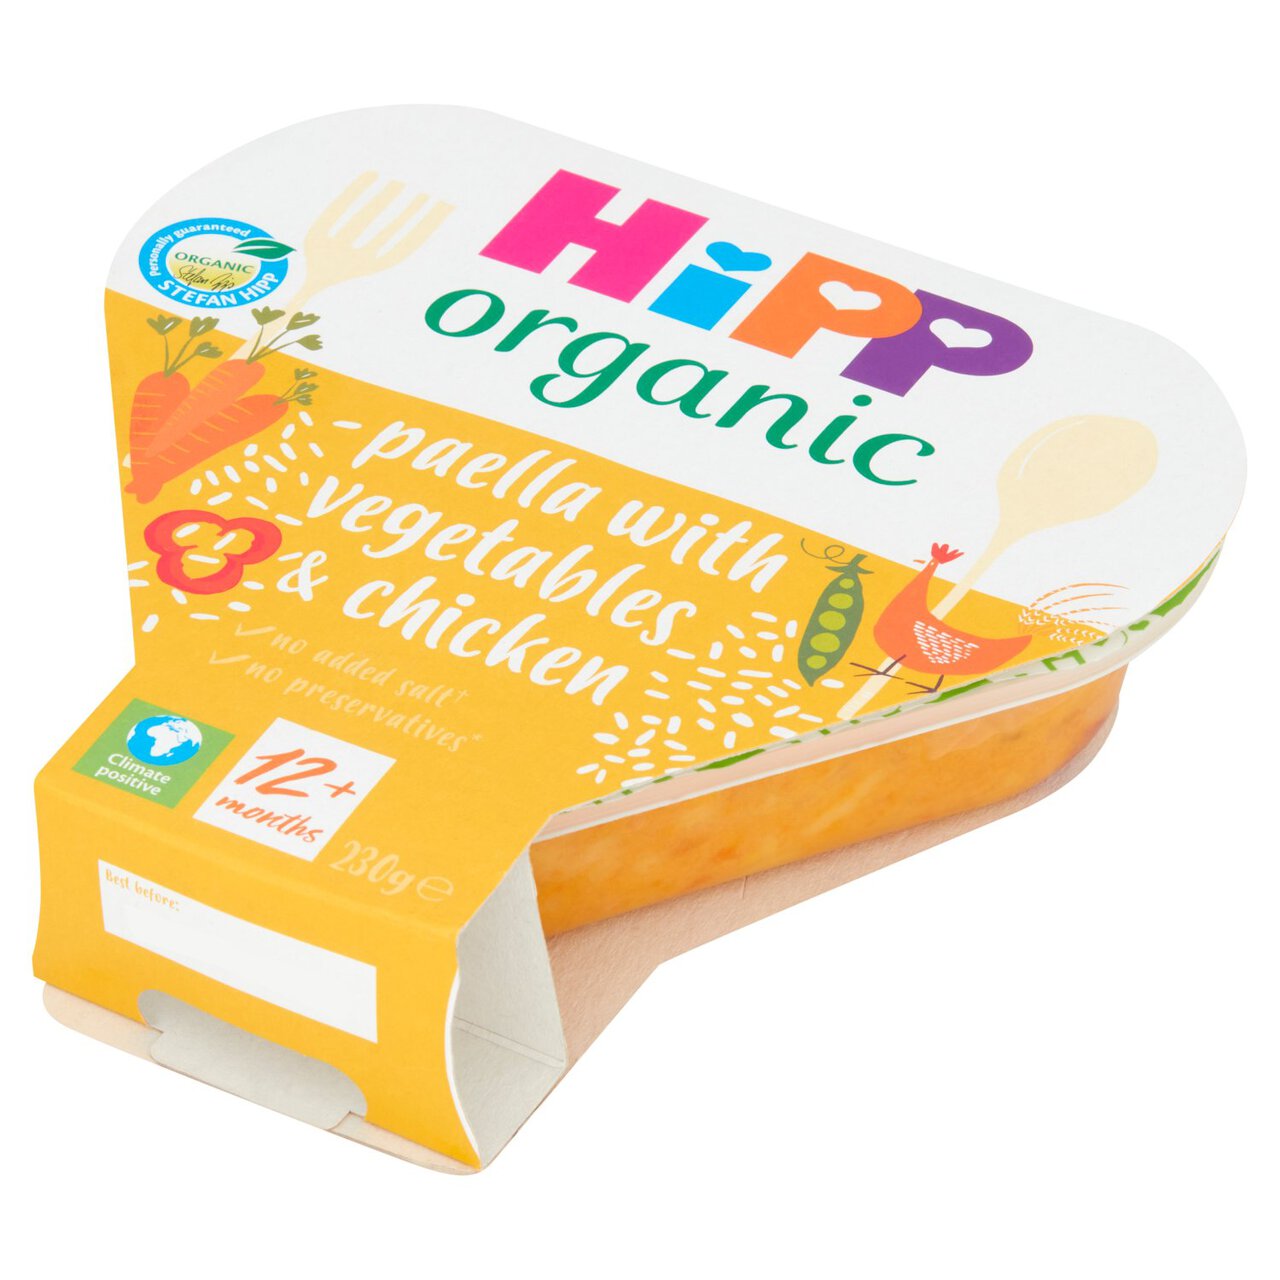 HiPP Organic Paella with Vegetables, 12 mths+ 230g